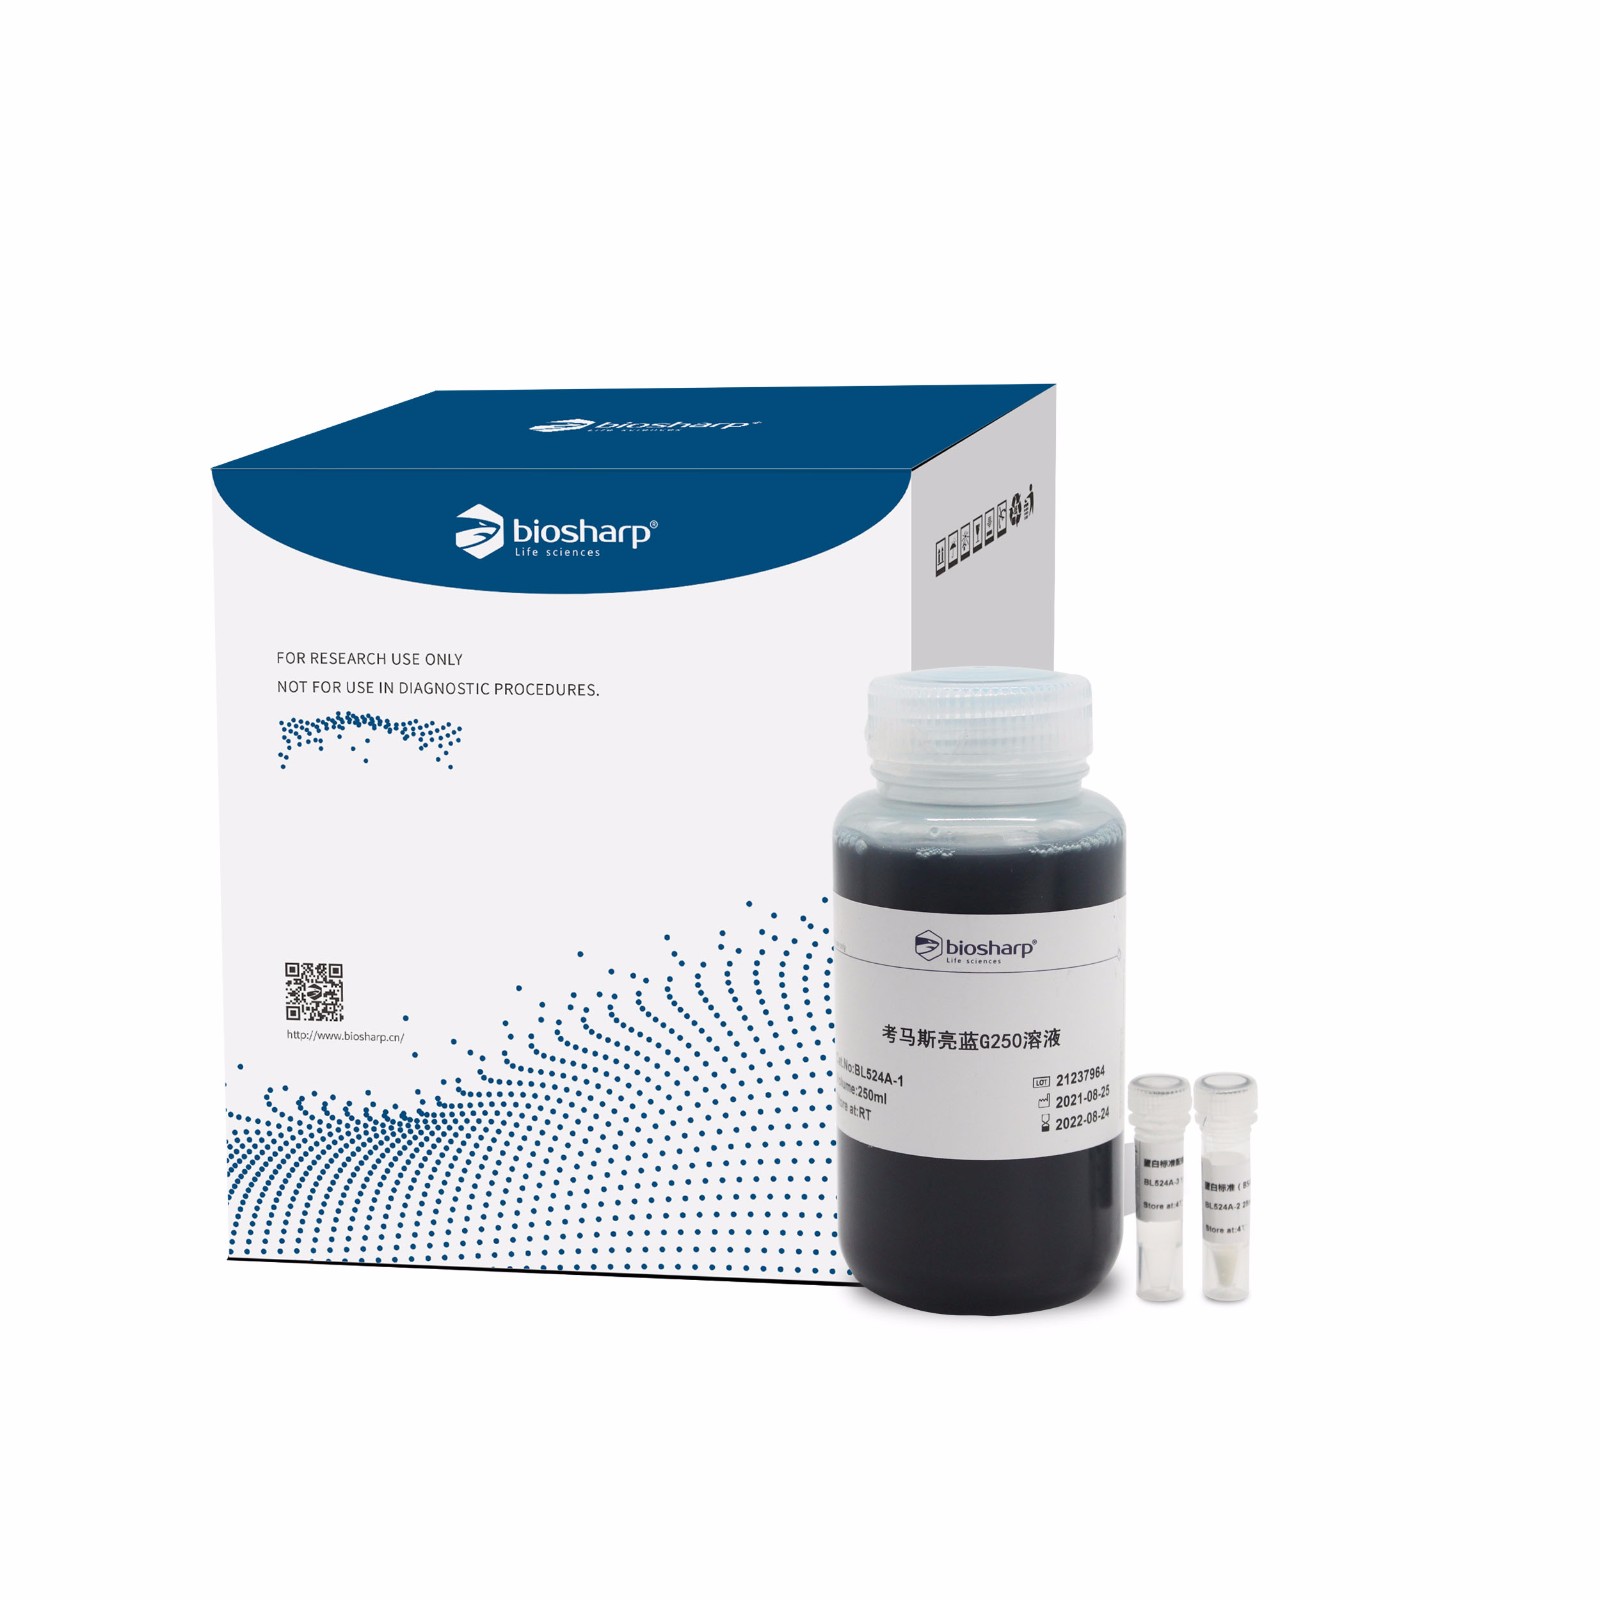 Biosharp BL524A Bradford蛋白浓度测定试剂盒